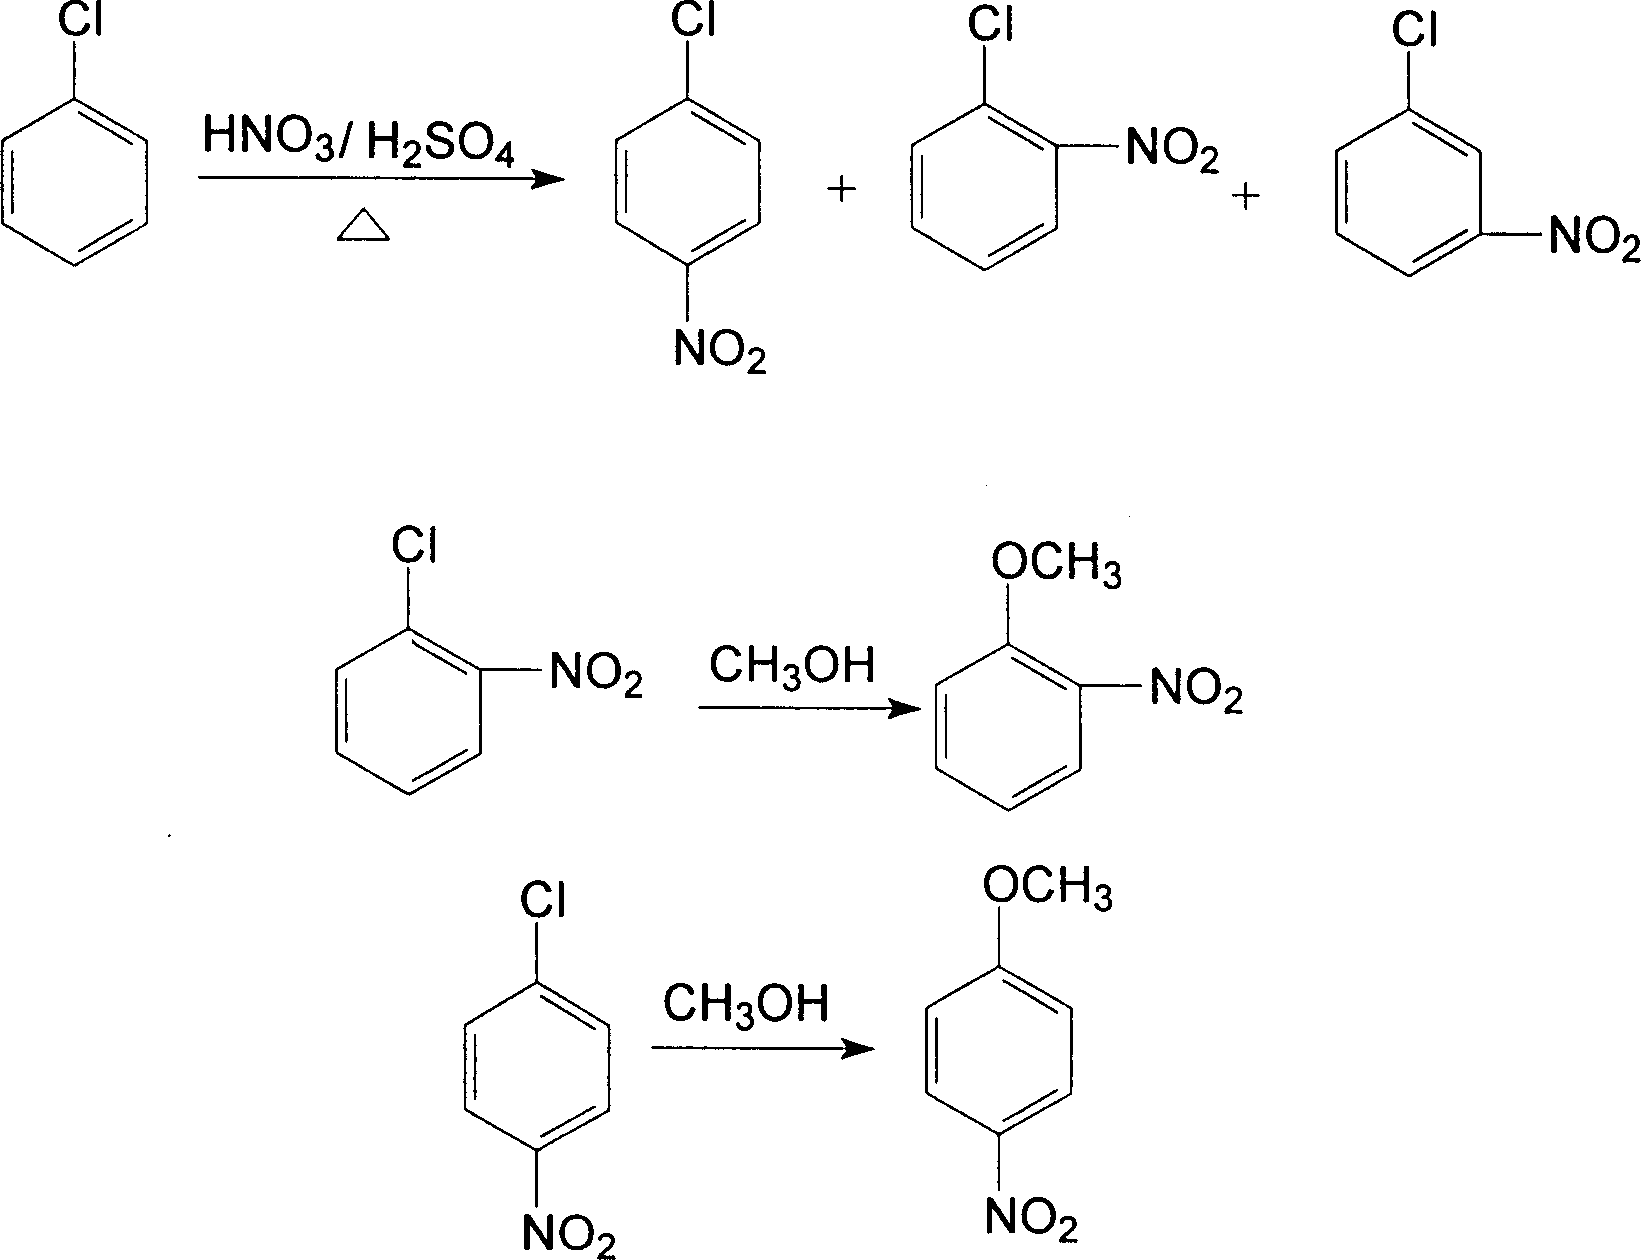 Tech. of producing ortho nitro methyl-phenoxide para nitro methyl-phenoxide and meta nitro chlorobenzene from chlorobenzene